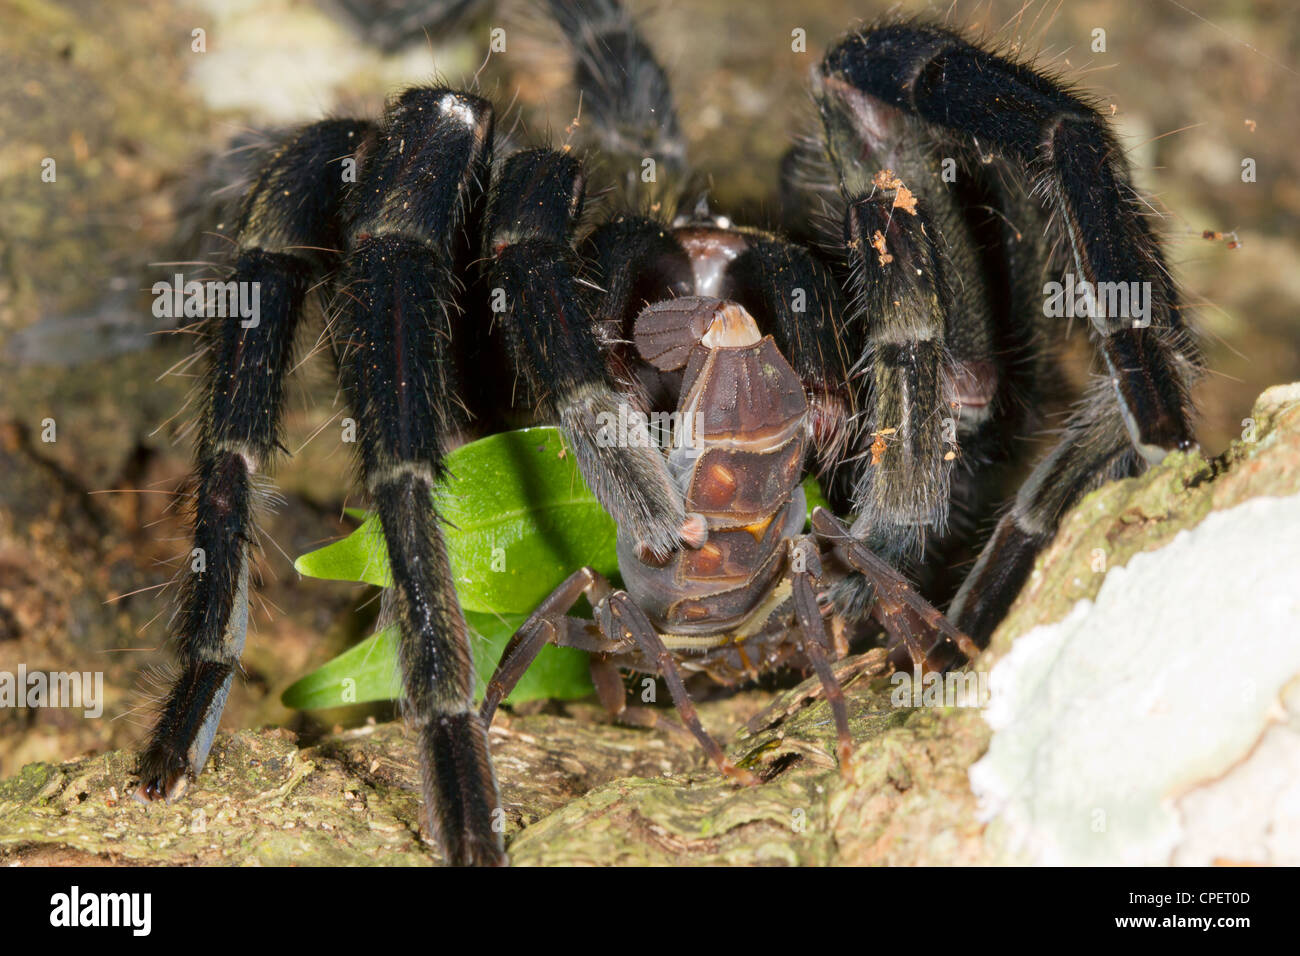 Tarantula eating a scorpion in rainforest, Ecuador Stock Photo